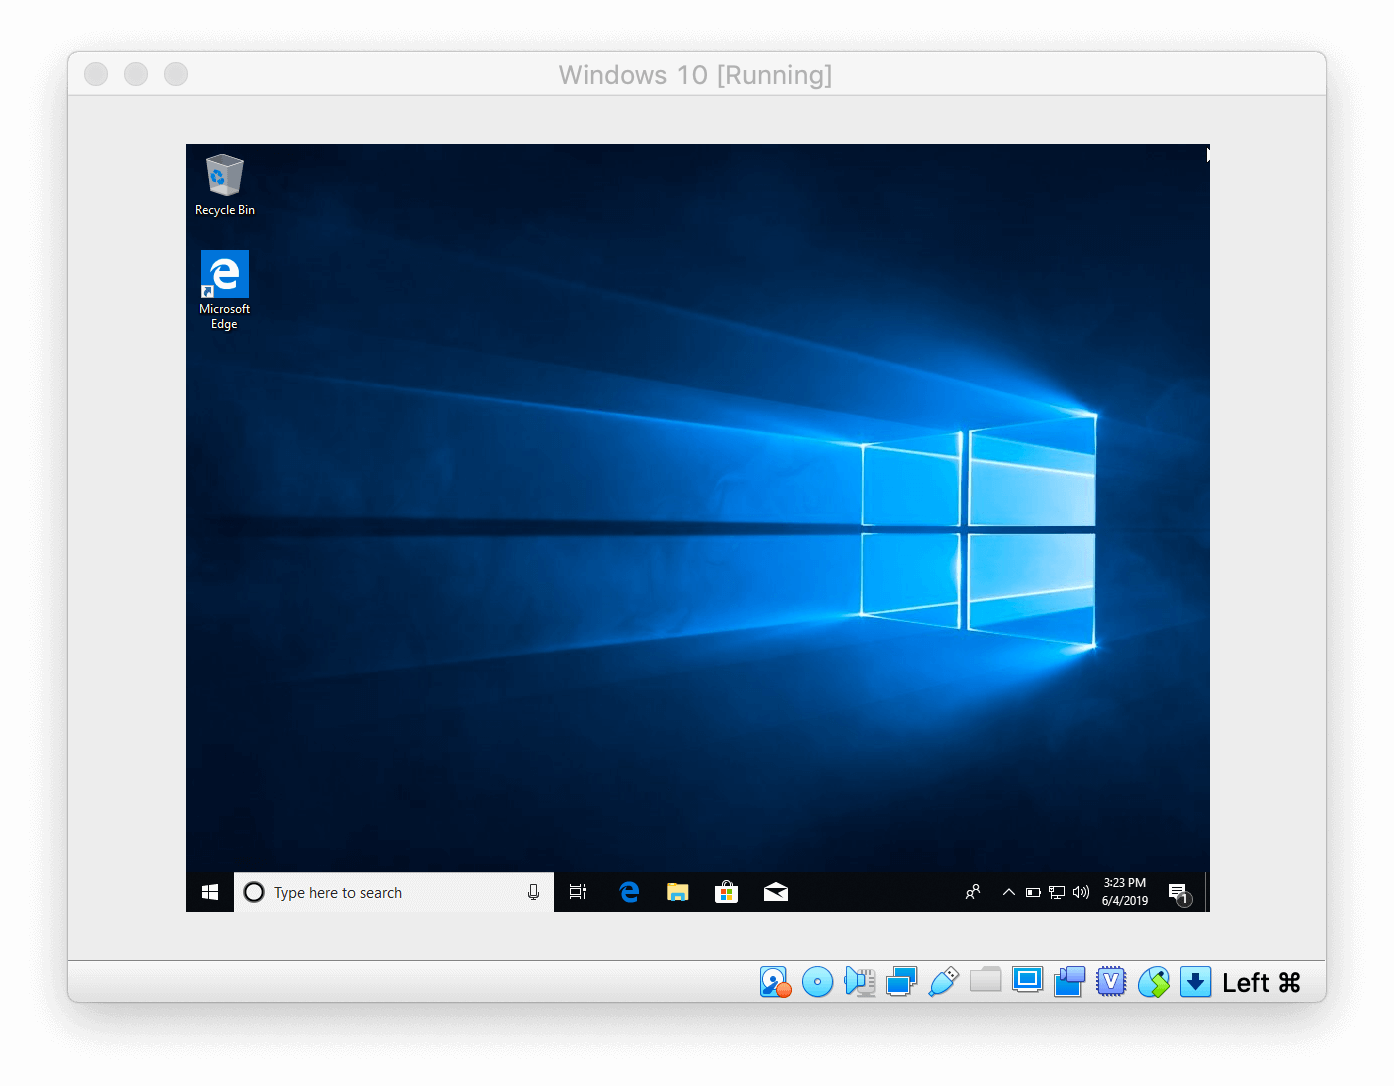 Windows launched on Mac via Virtualbox